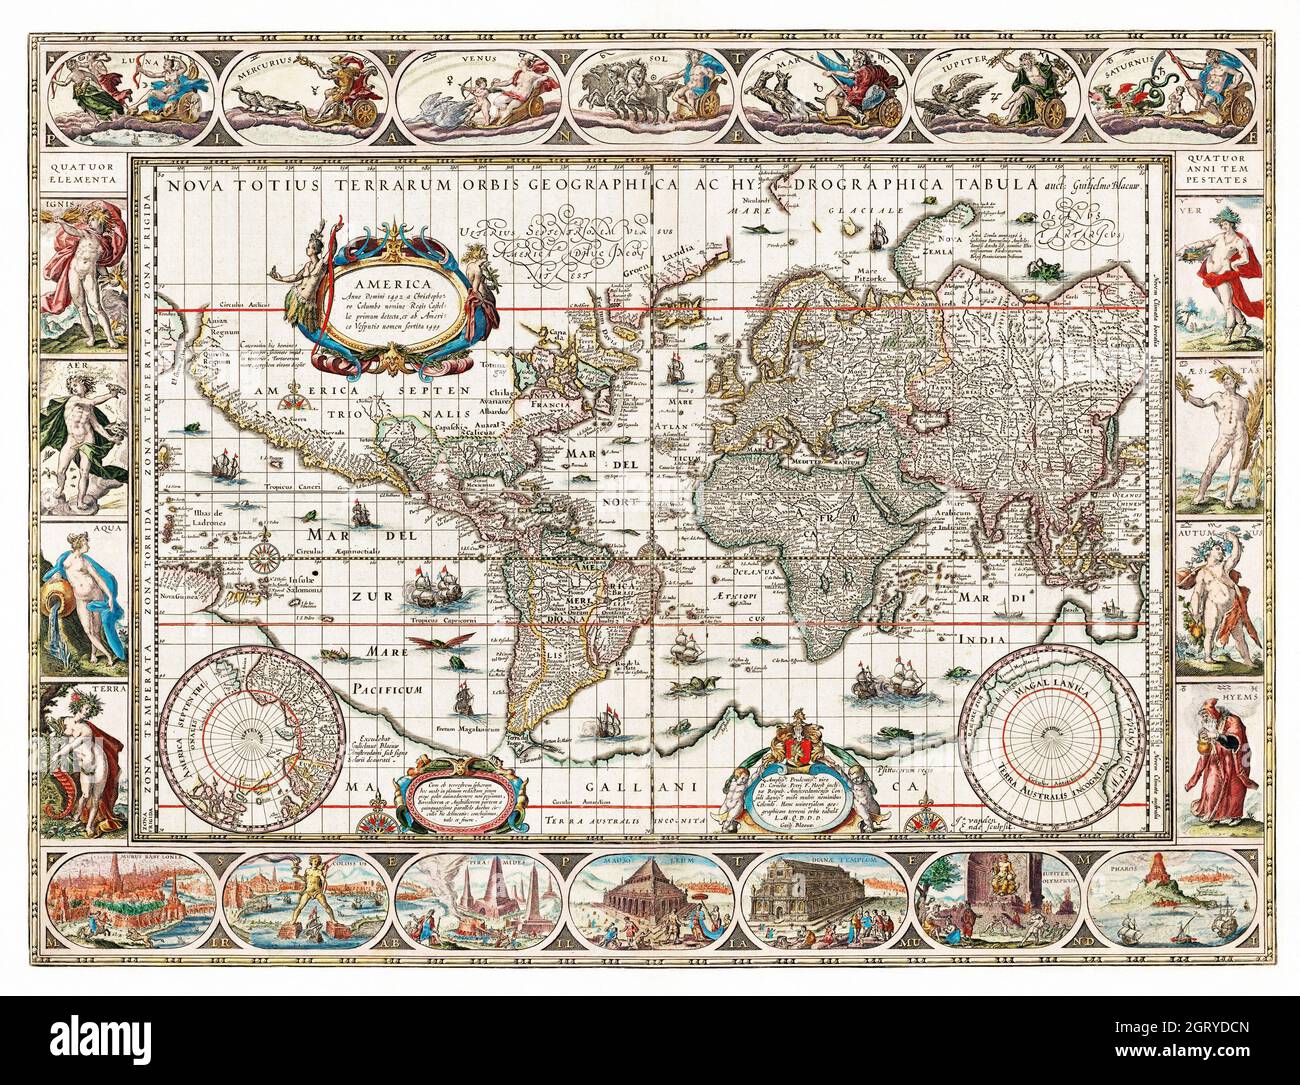 Nova totius terrarum orbis geographica ac hydrographica tabula (1635-1649) by Jan Aertse van den Ende. Map of the World. Stock Photo